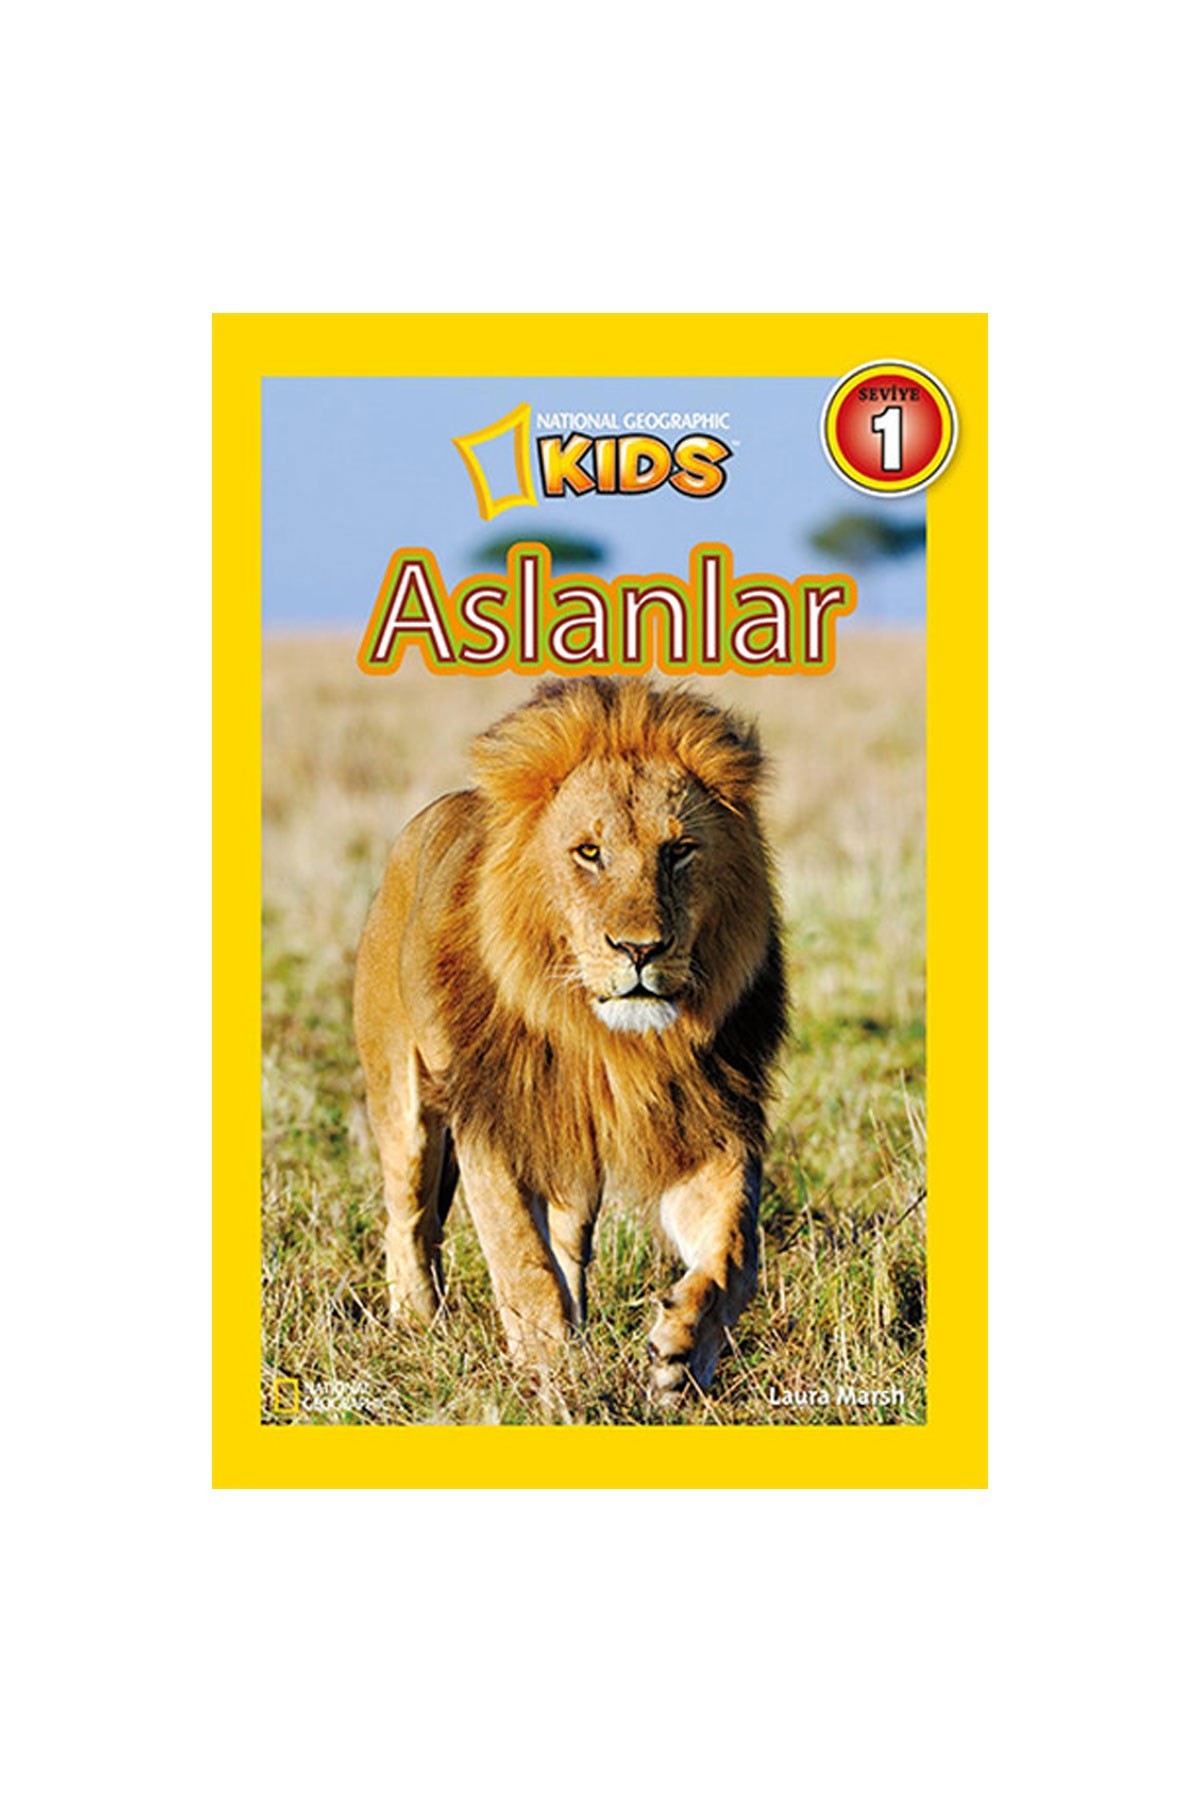 National Geographic Kids Aslanlar